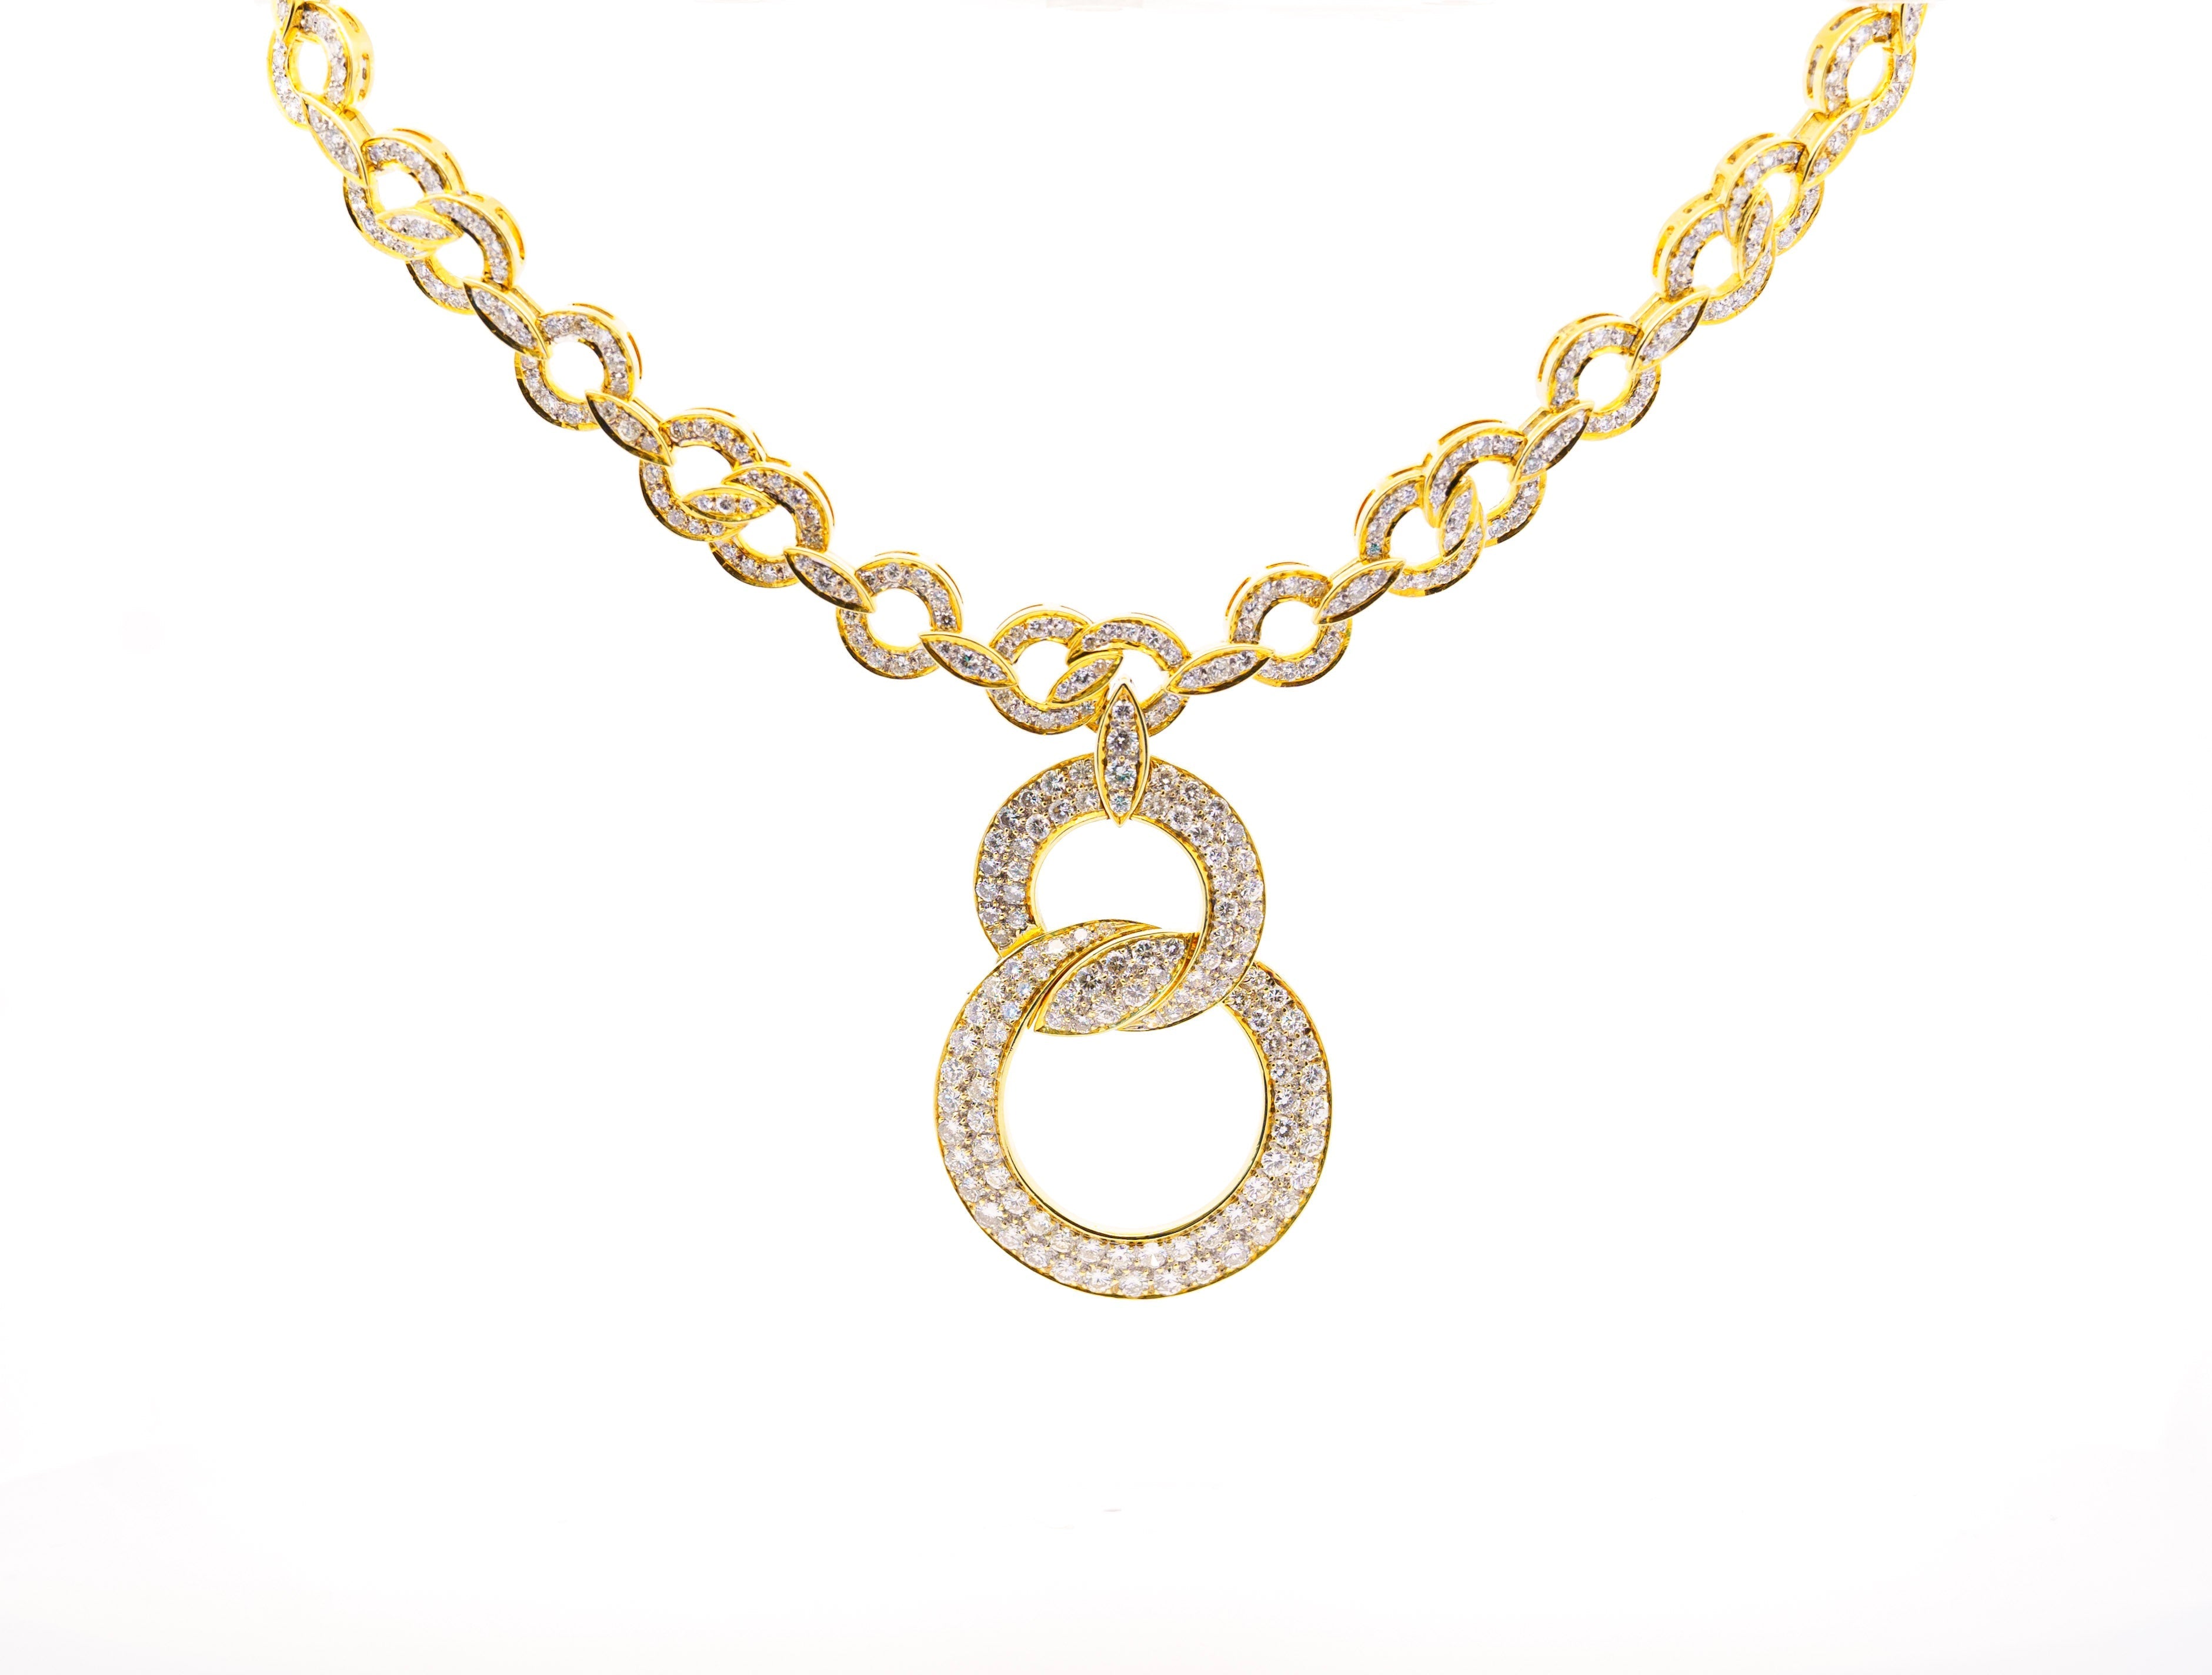 Natural-Diamond-16-Carat-Round-Brilliant-Cut-Interlocking-Circle-Pendant-Necklace-in-18K-Yellow-Gold-Necklace_0c8909b0-8b60-4c79-b2e7-4211378941bf.jpg